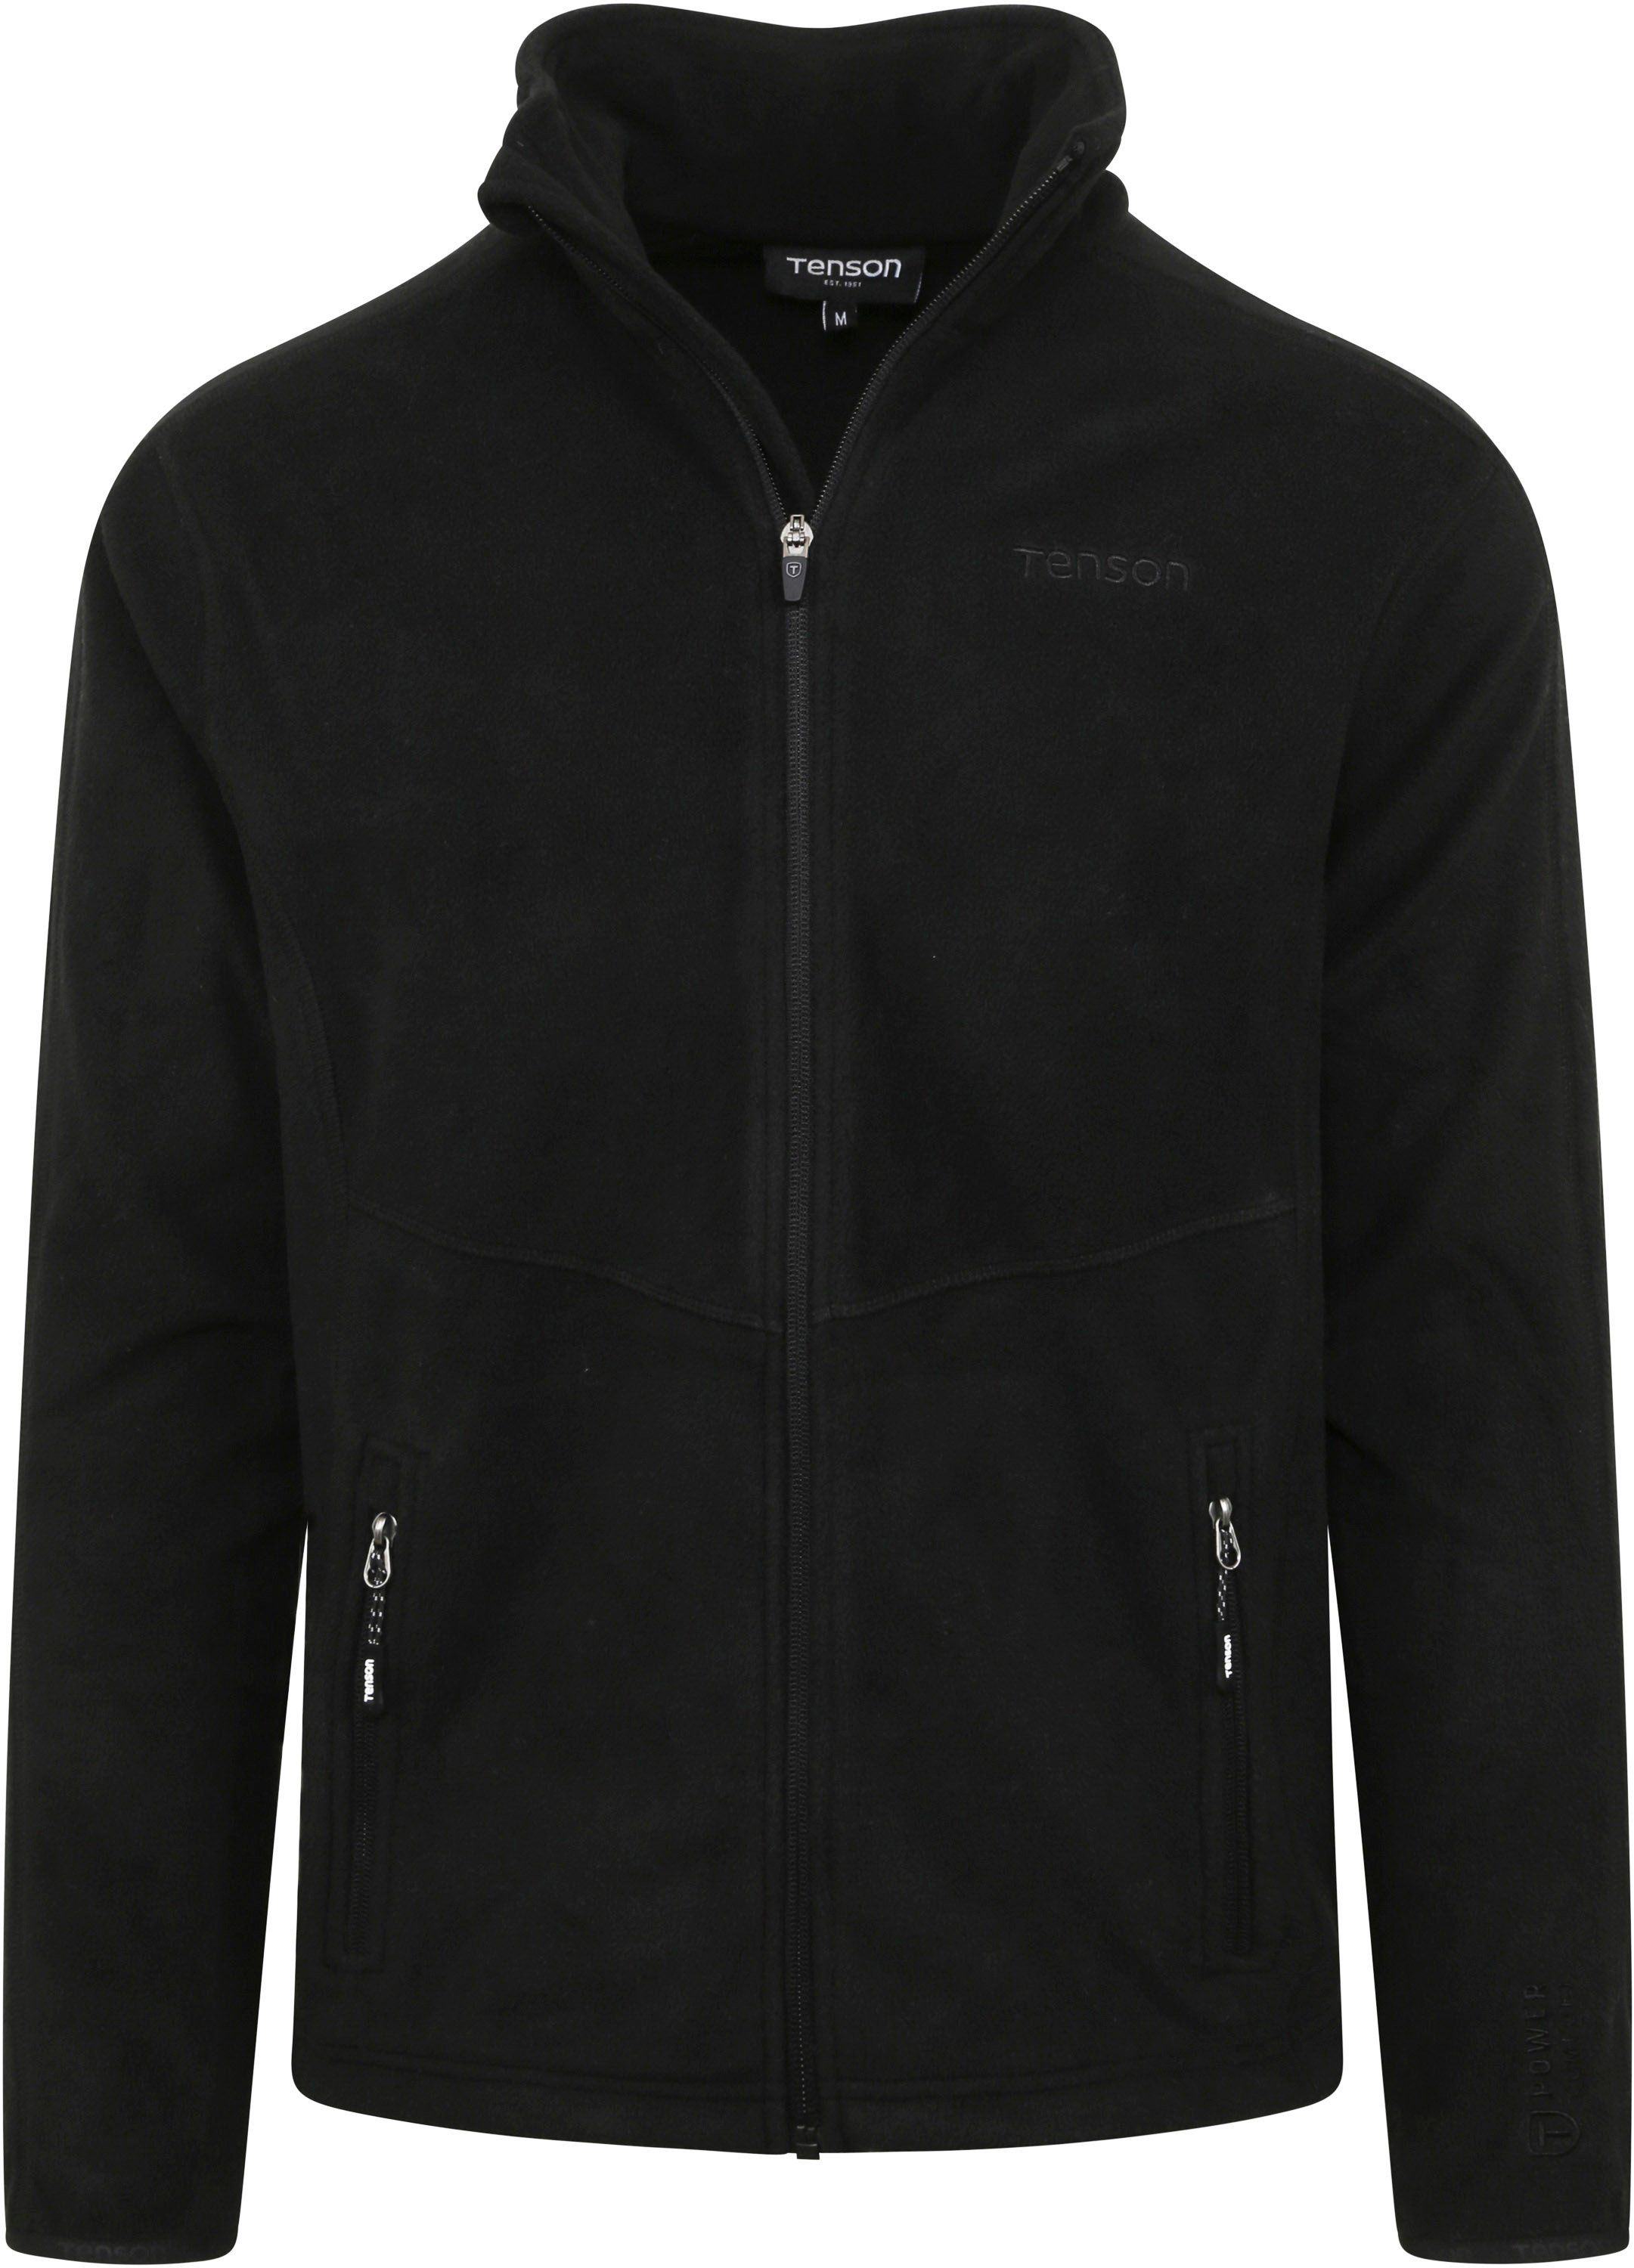 Tenson Miracle Fleece Jacket Black size M